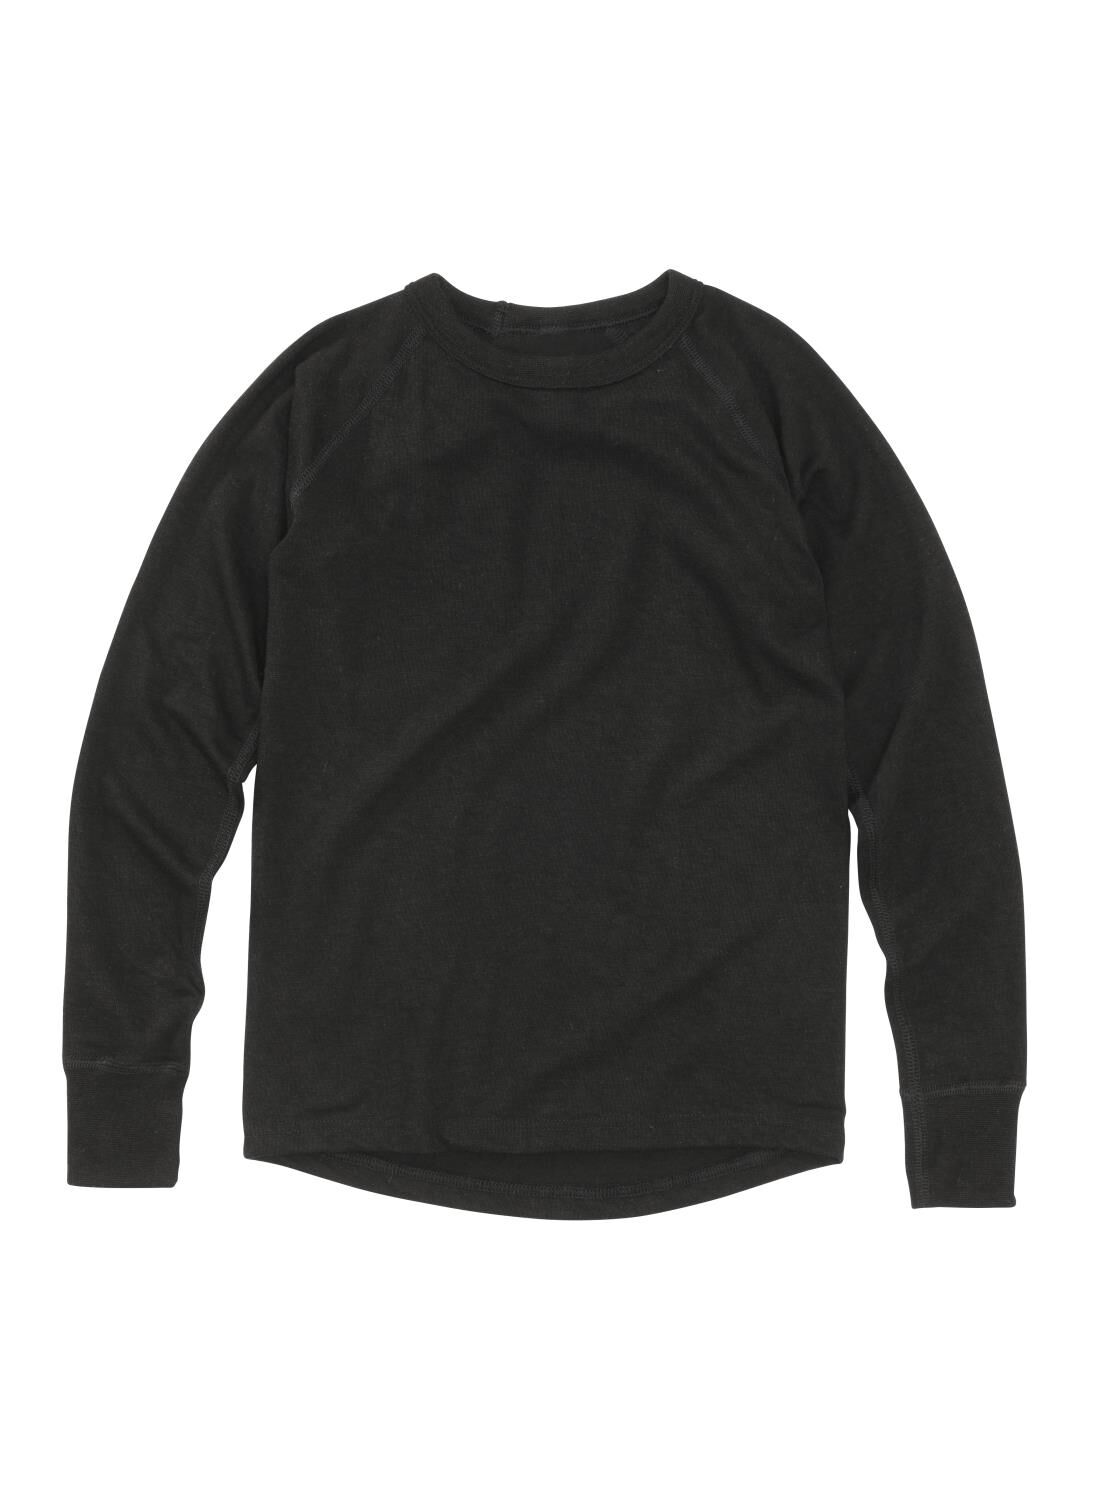 HEMA Kinder Thermo T-shirt Zwart (zwart)